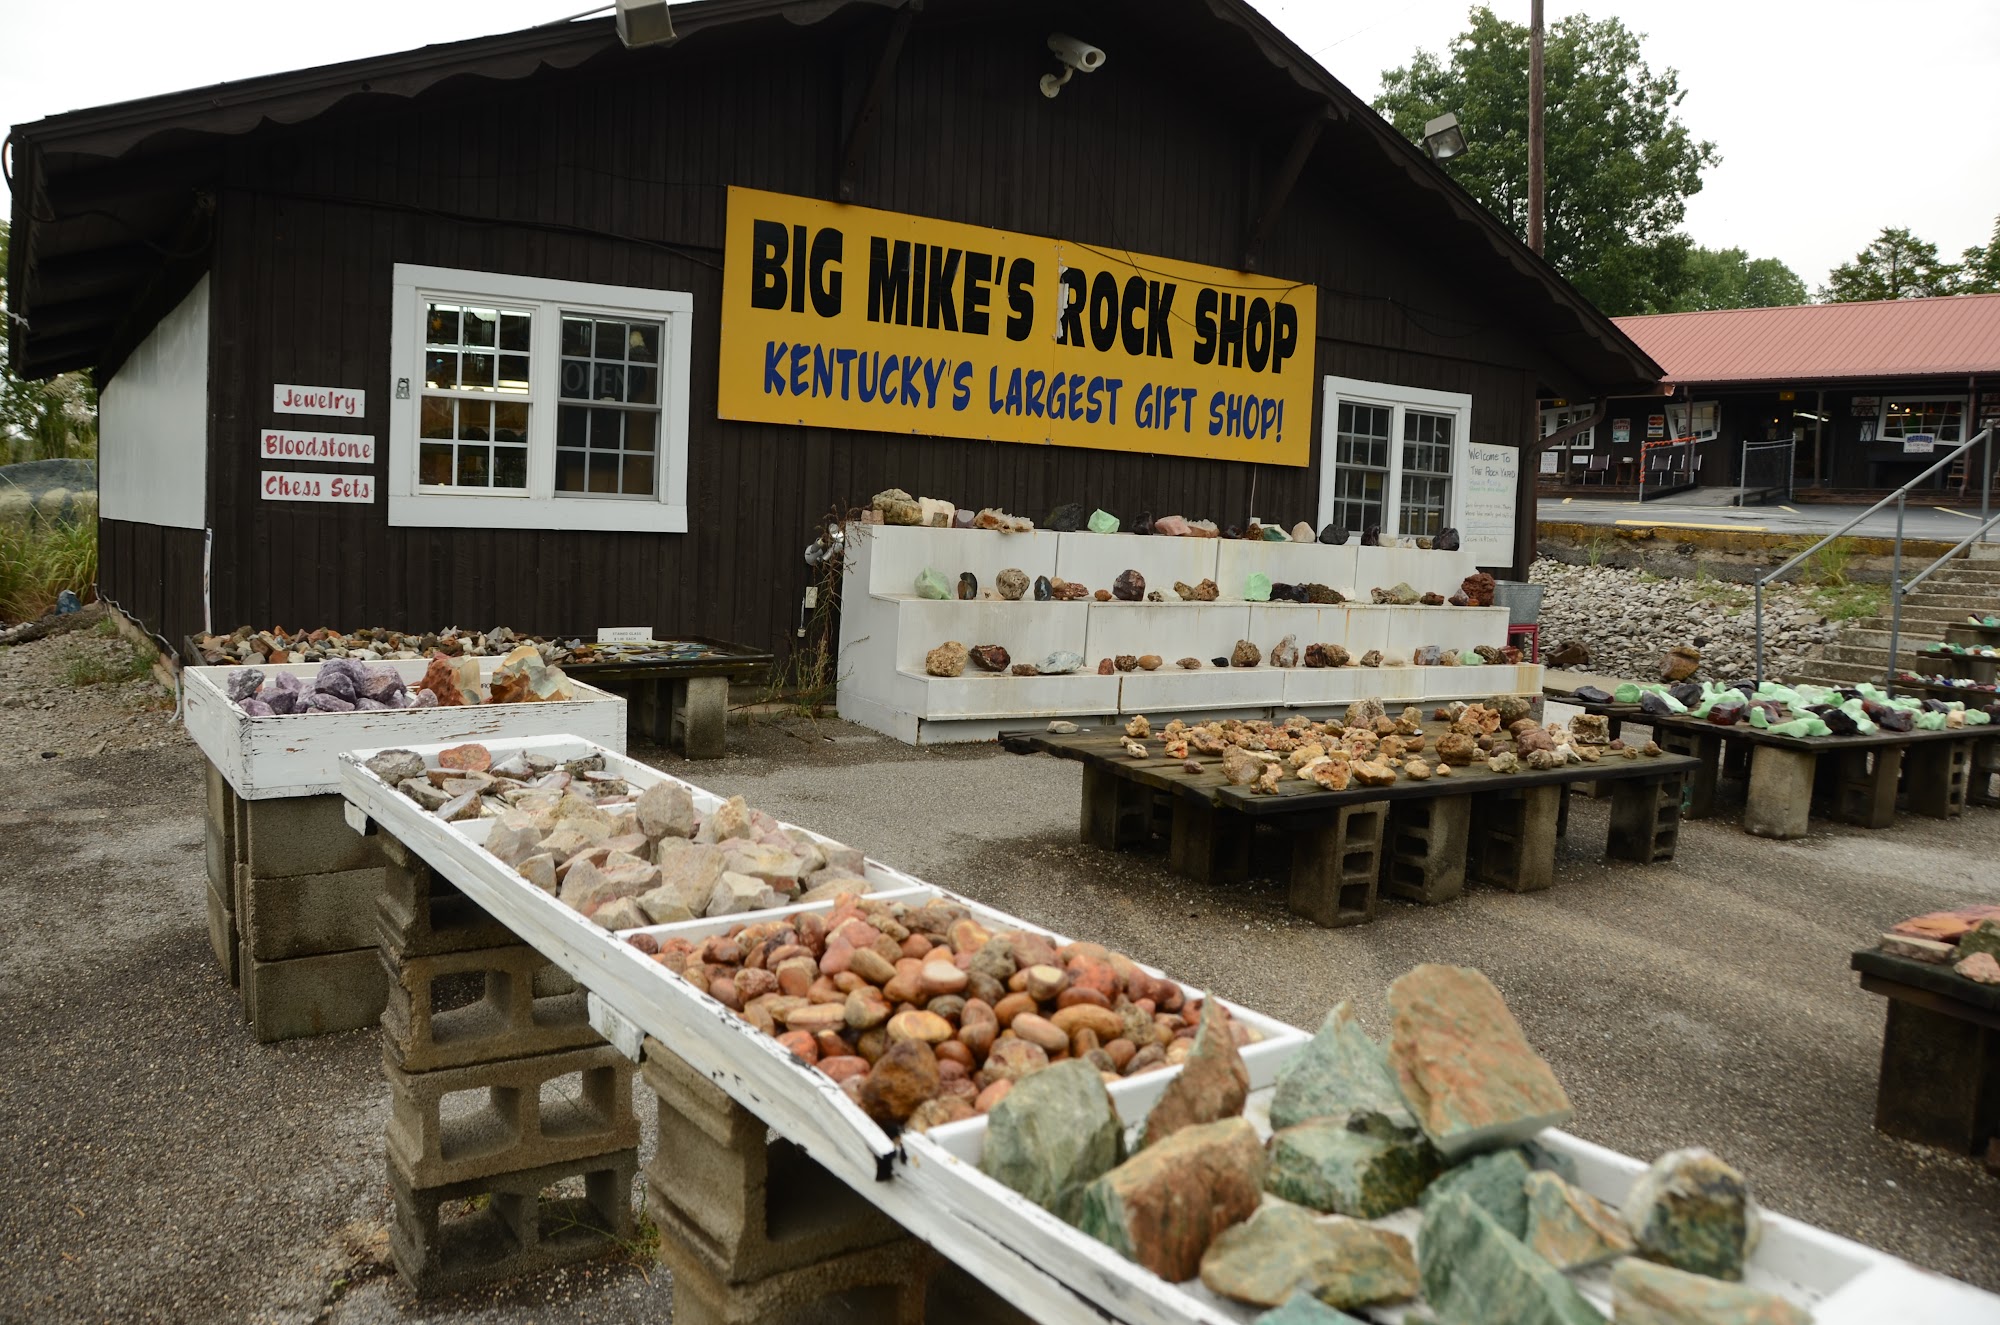 Big Mike's Rock Shop